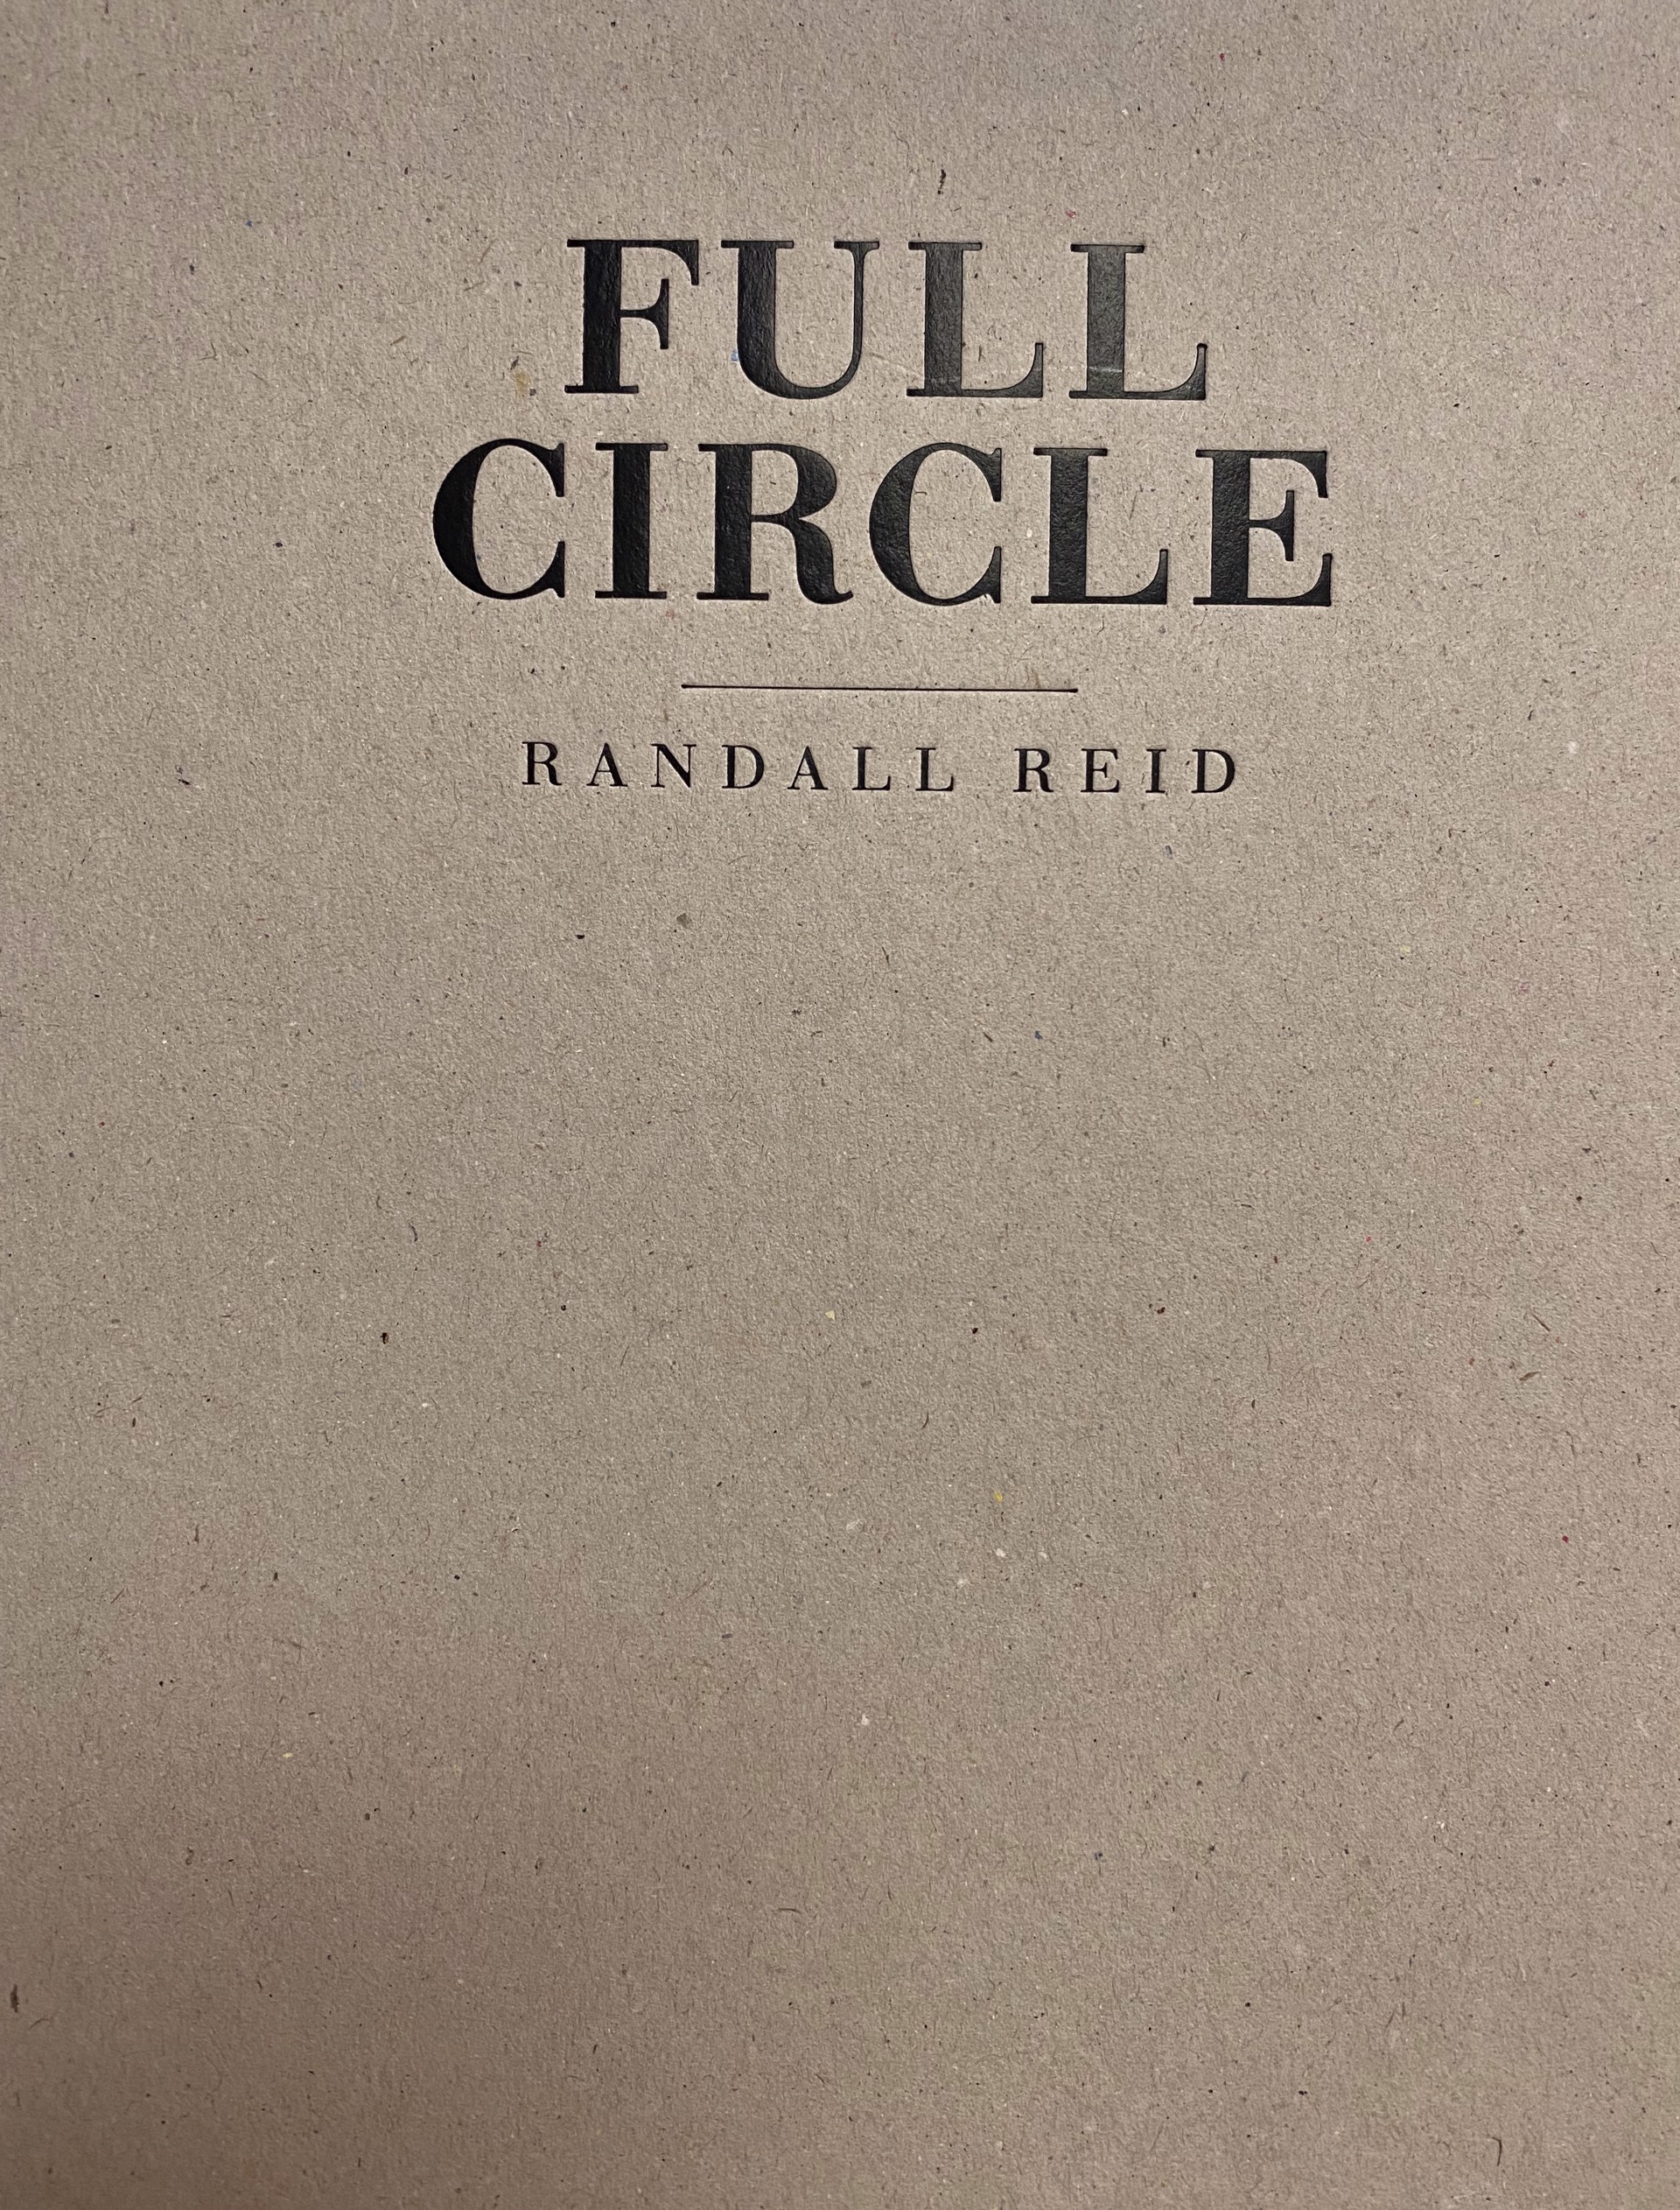 Randall Reid: Full Circle by Randall Reid